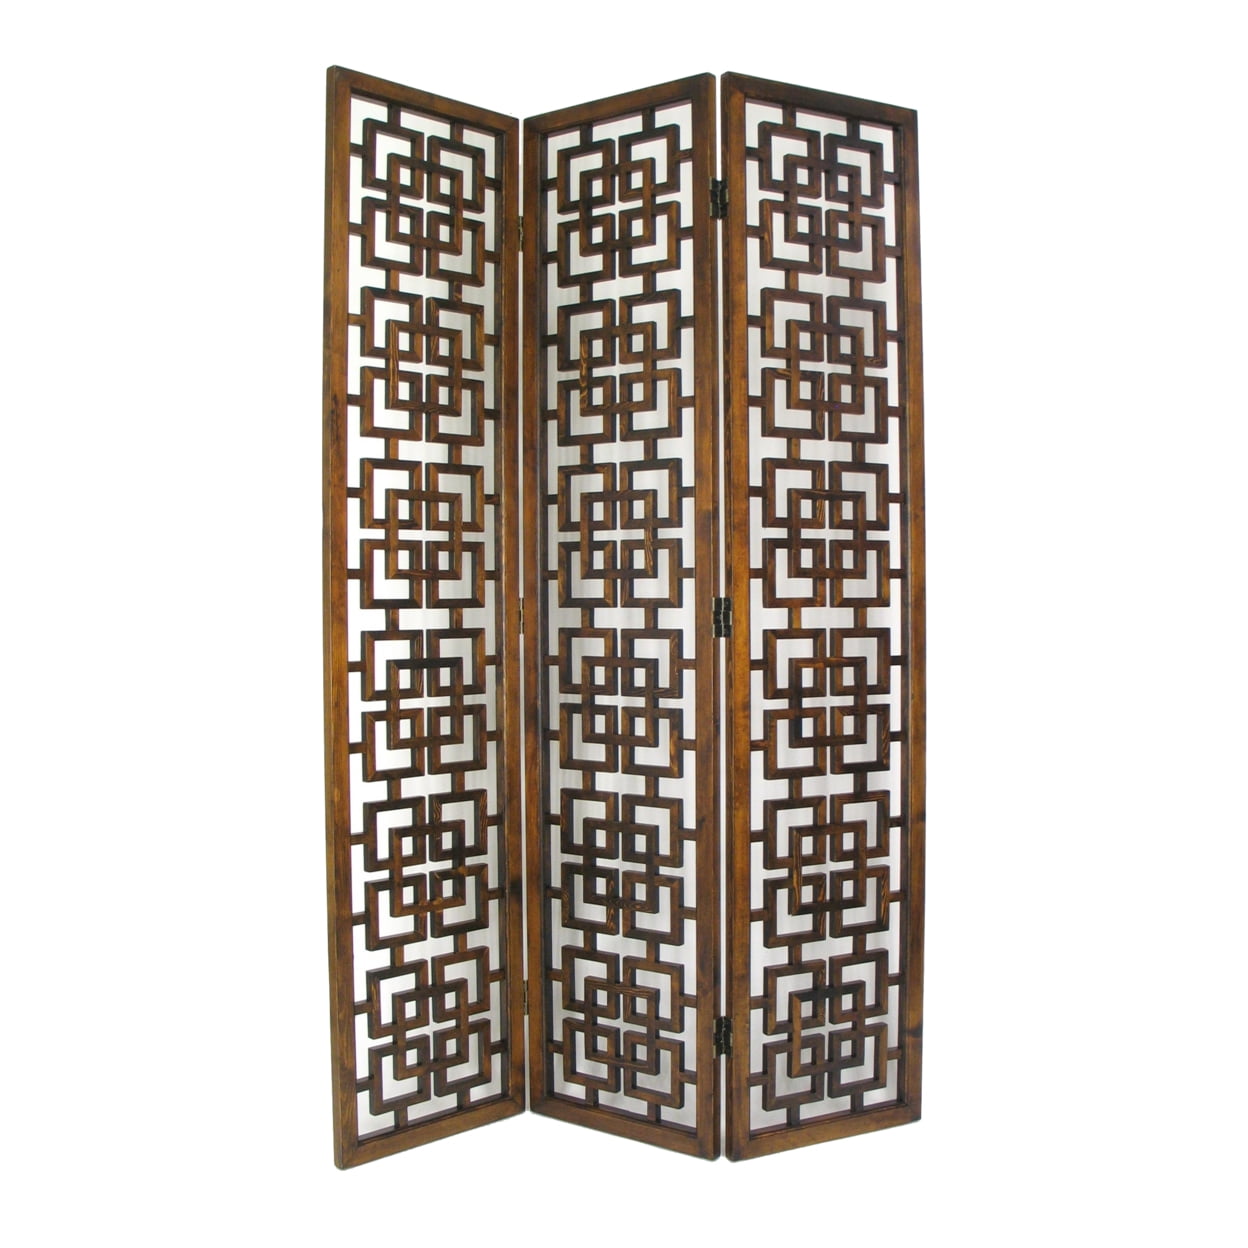 Picture of Benjara BM213440 Wooden 3 Panel Screen with Interlocking Square Design - Brown